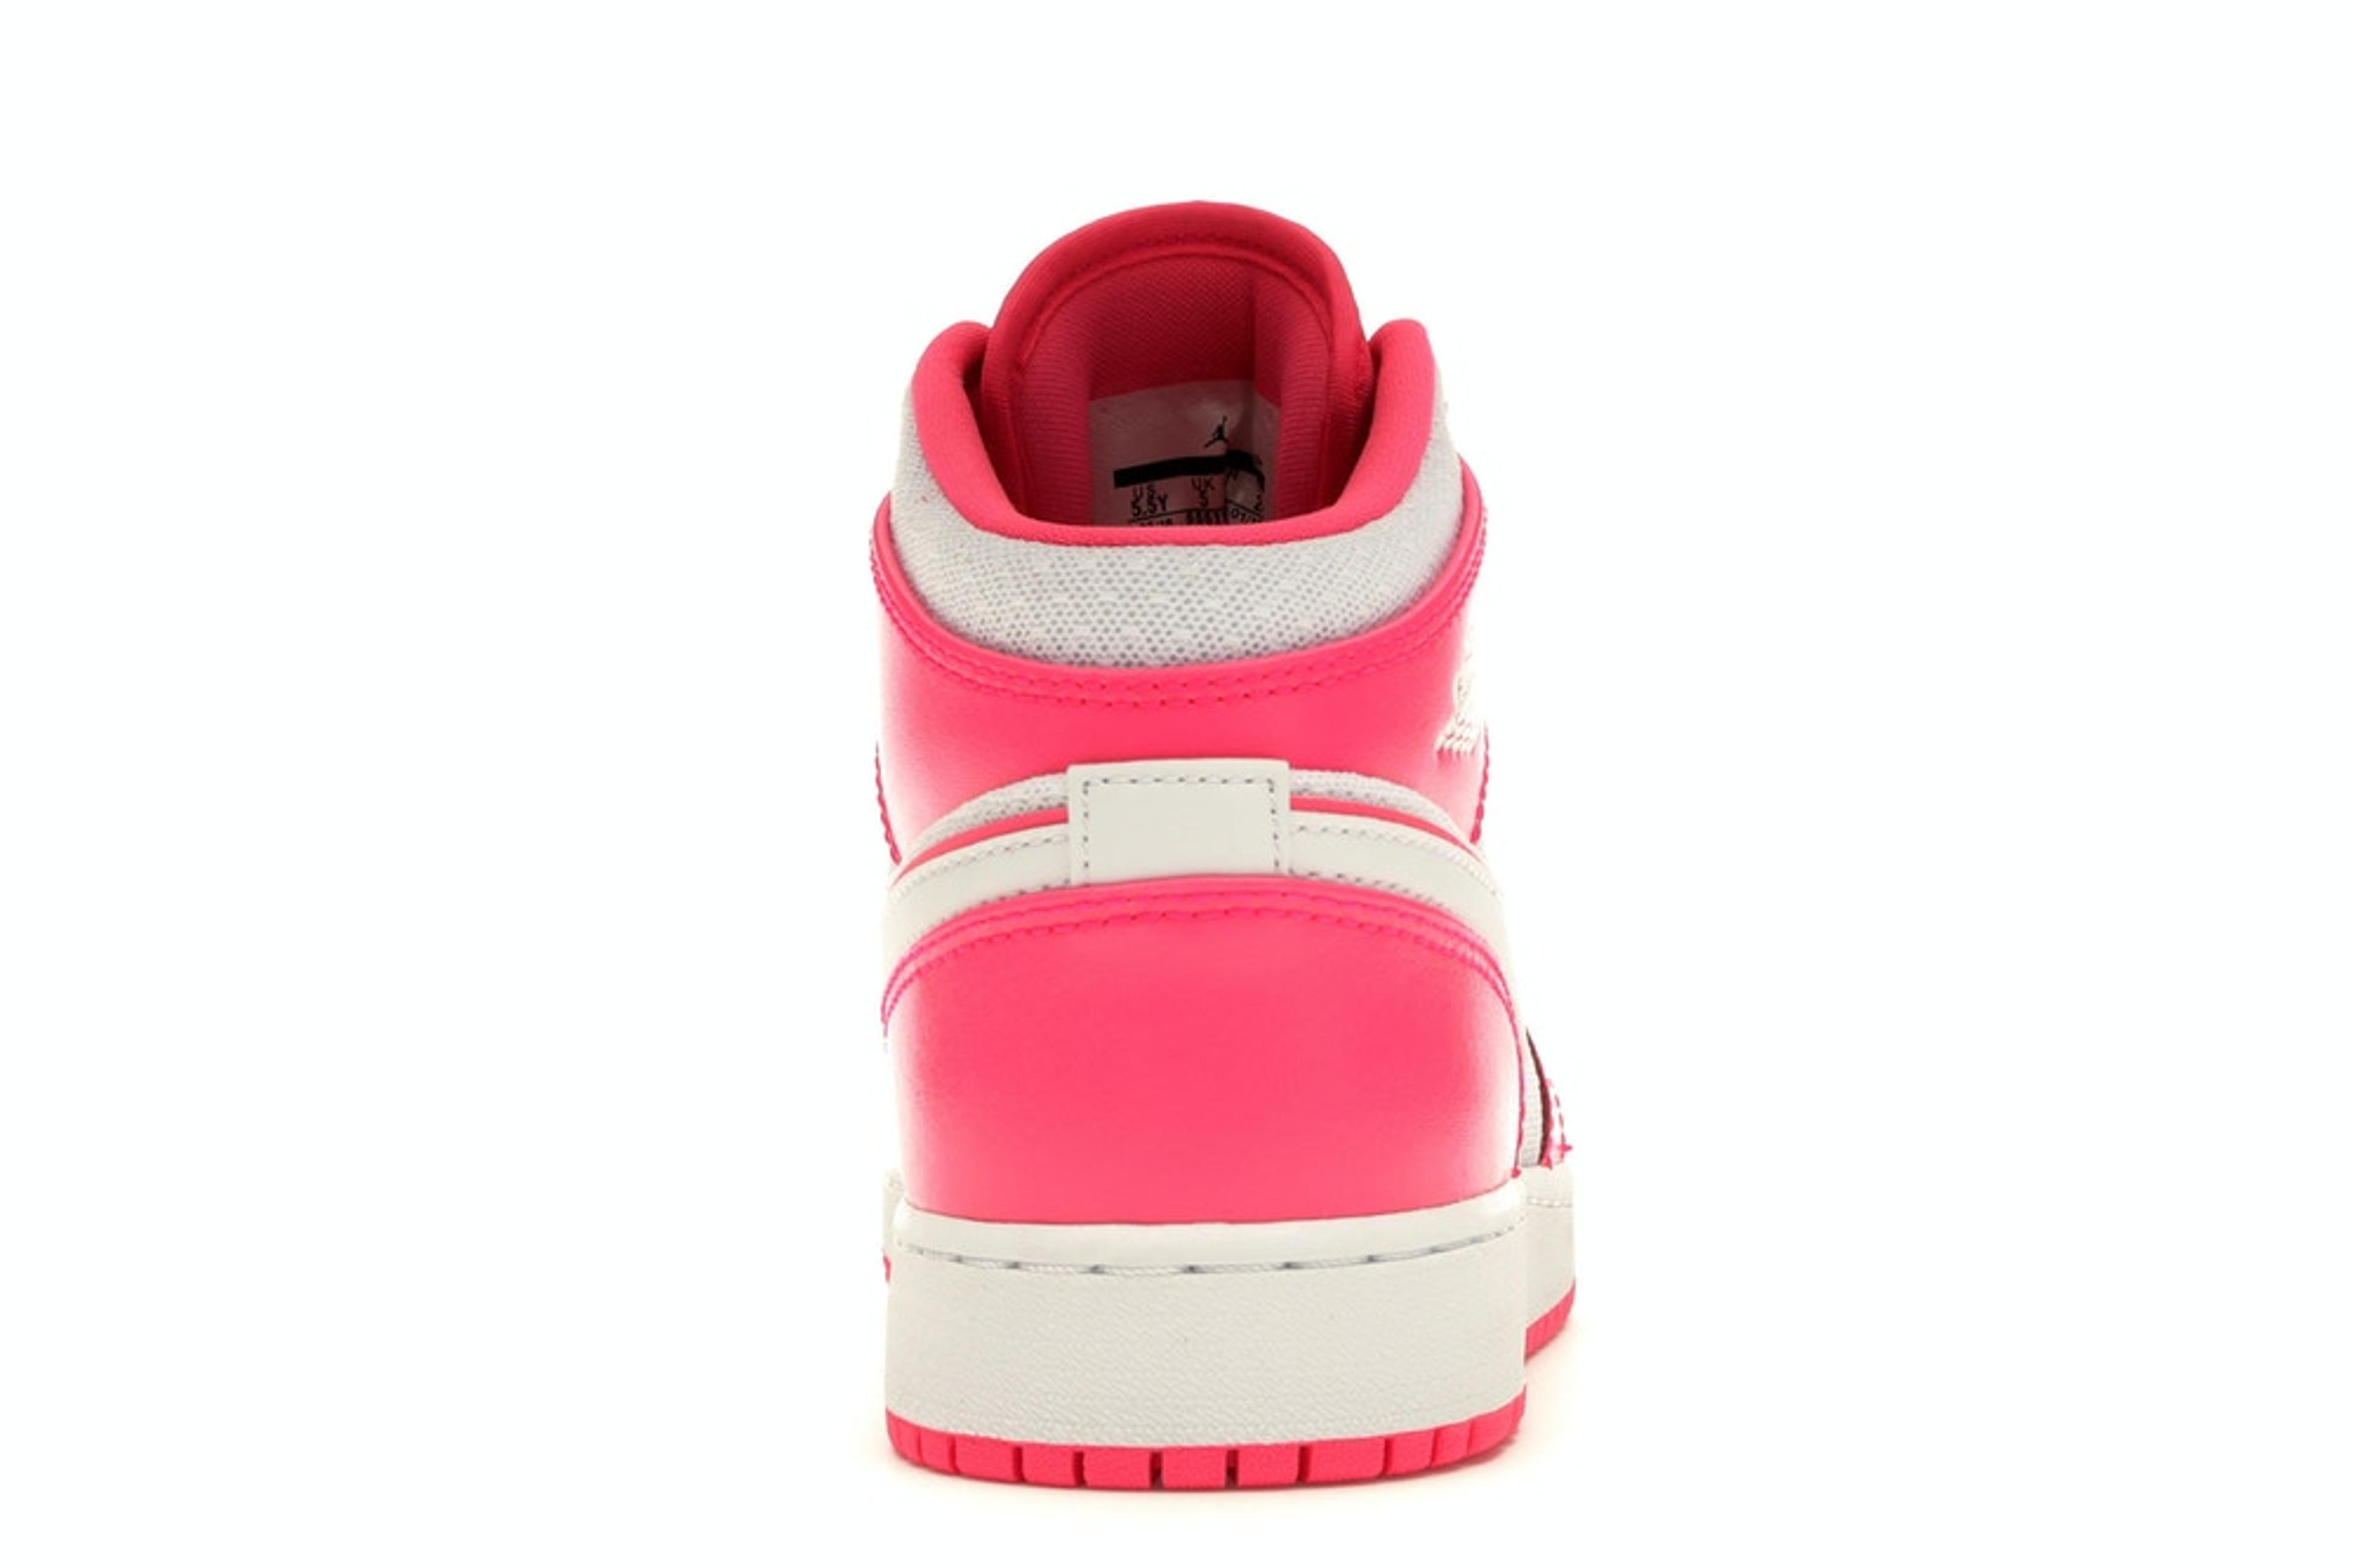 Alternate View 2 of Air Jordan 1 Mid "Hyper Pink" (GS)